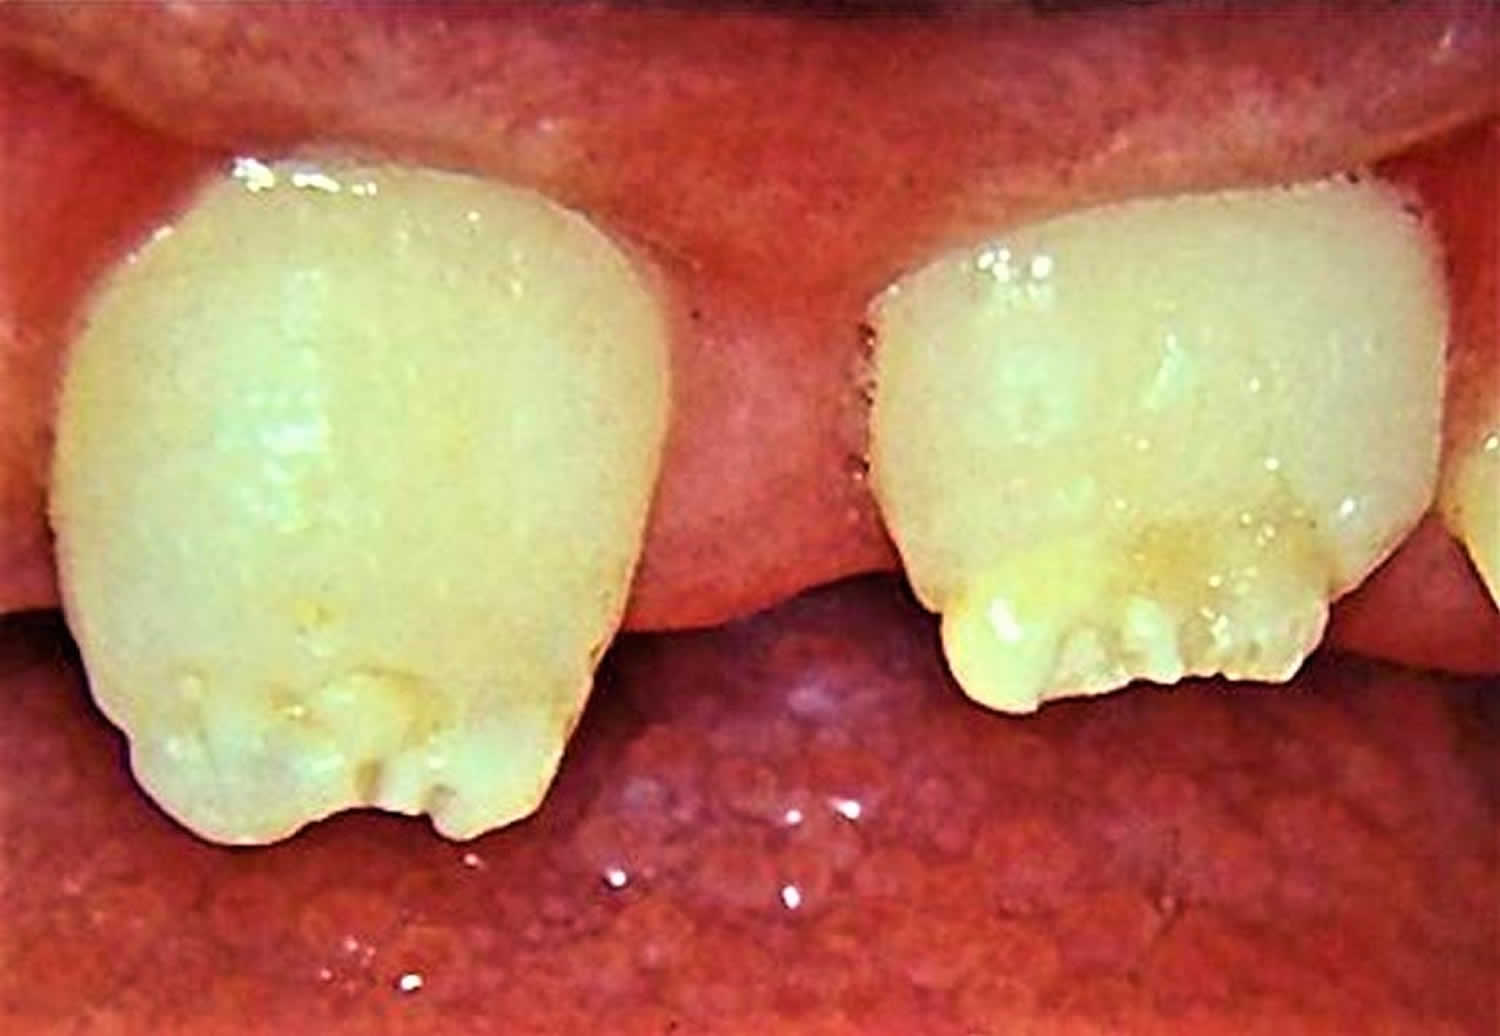 Congenital syphilis - Hutchinson’s teeth